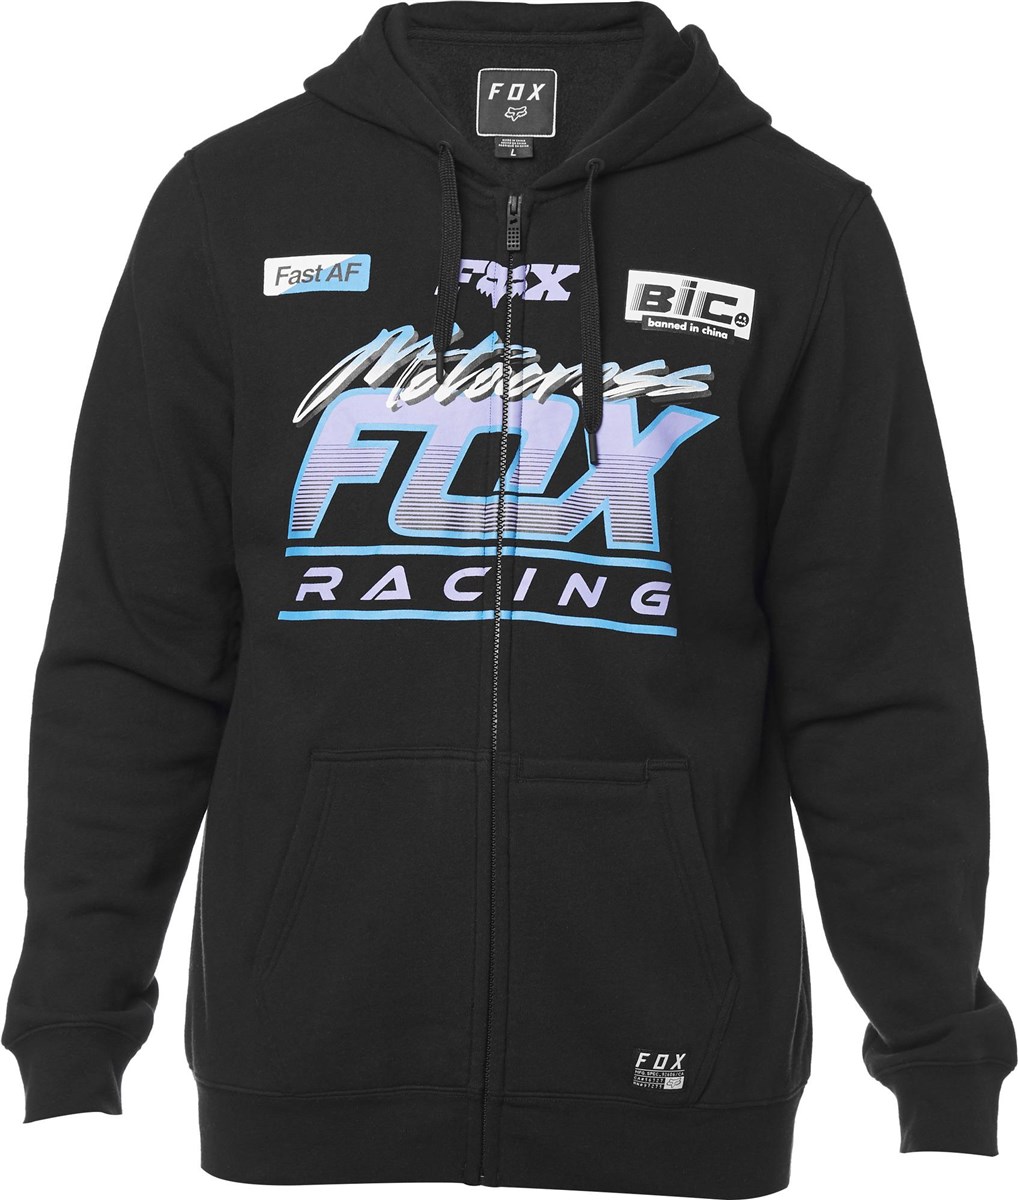 Fox Clothing Jetskee Zip Fleece product image